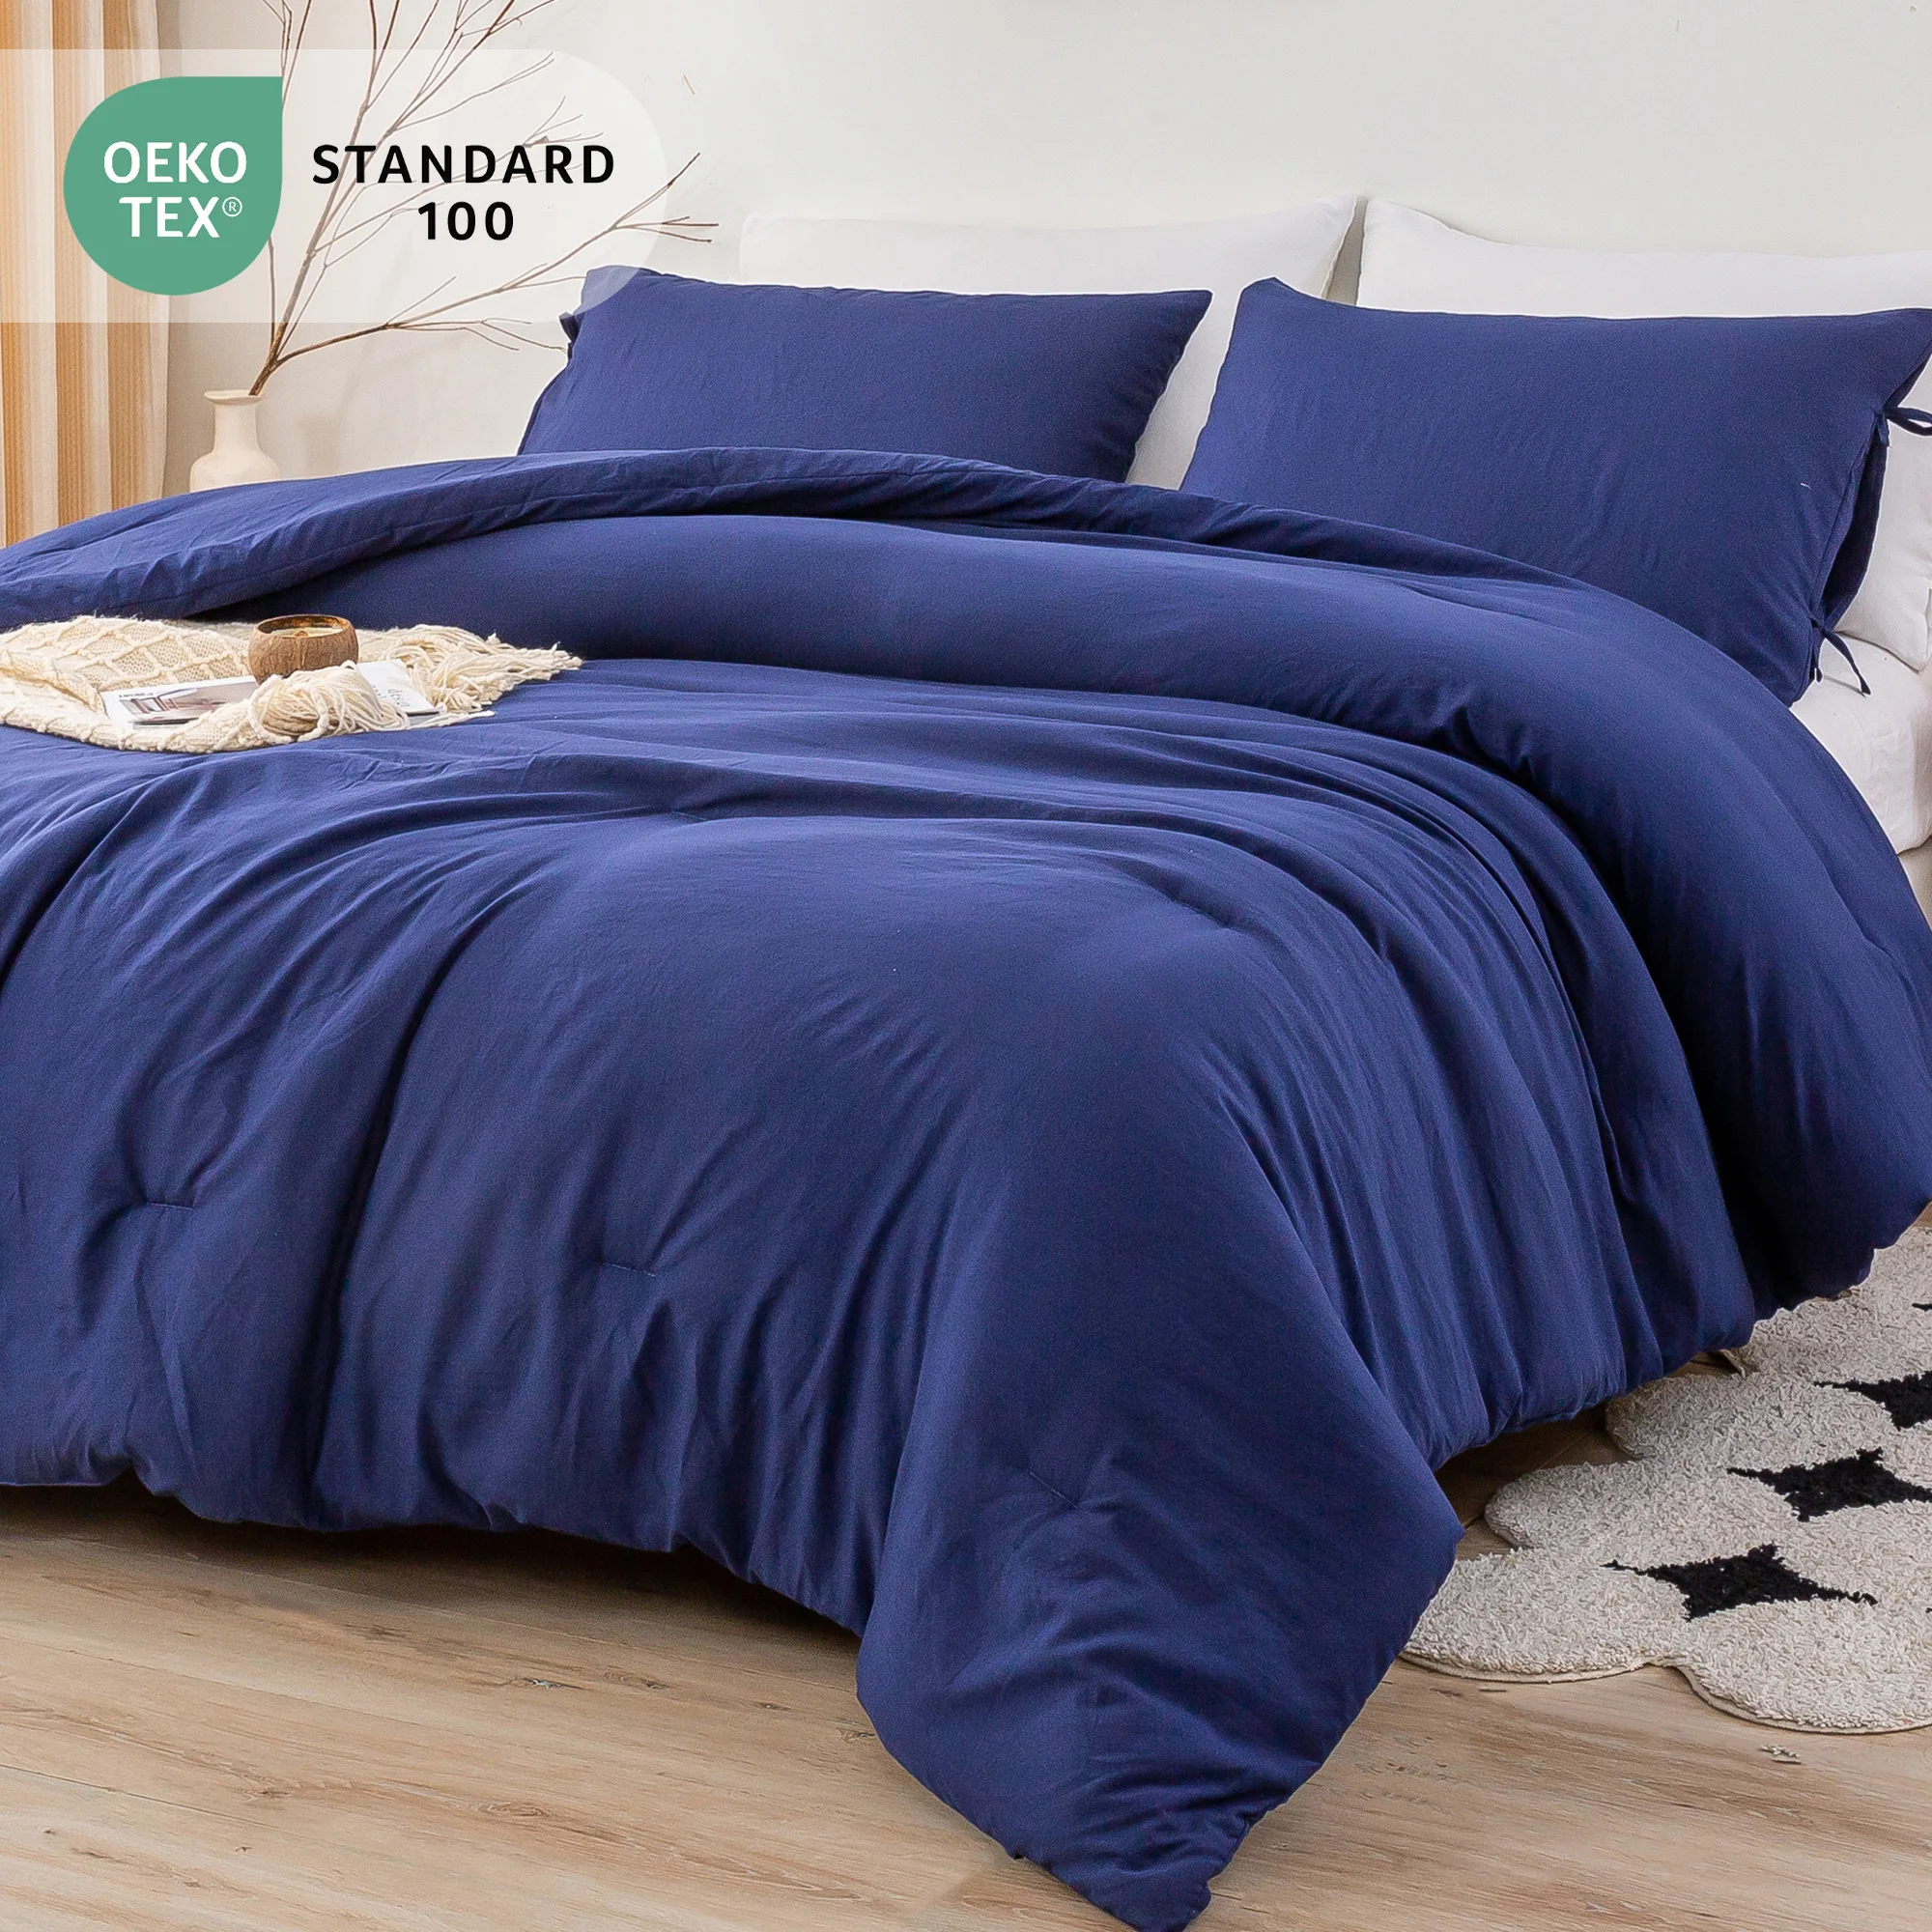 

Navy Blue Twin Size Comforter Set Super Soft Cozy Comfy Down Alternative Bedding & Pillowcase All Season Use